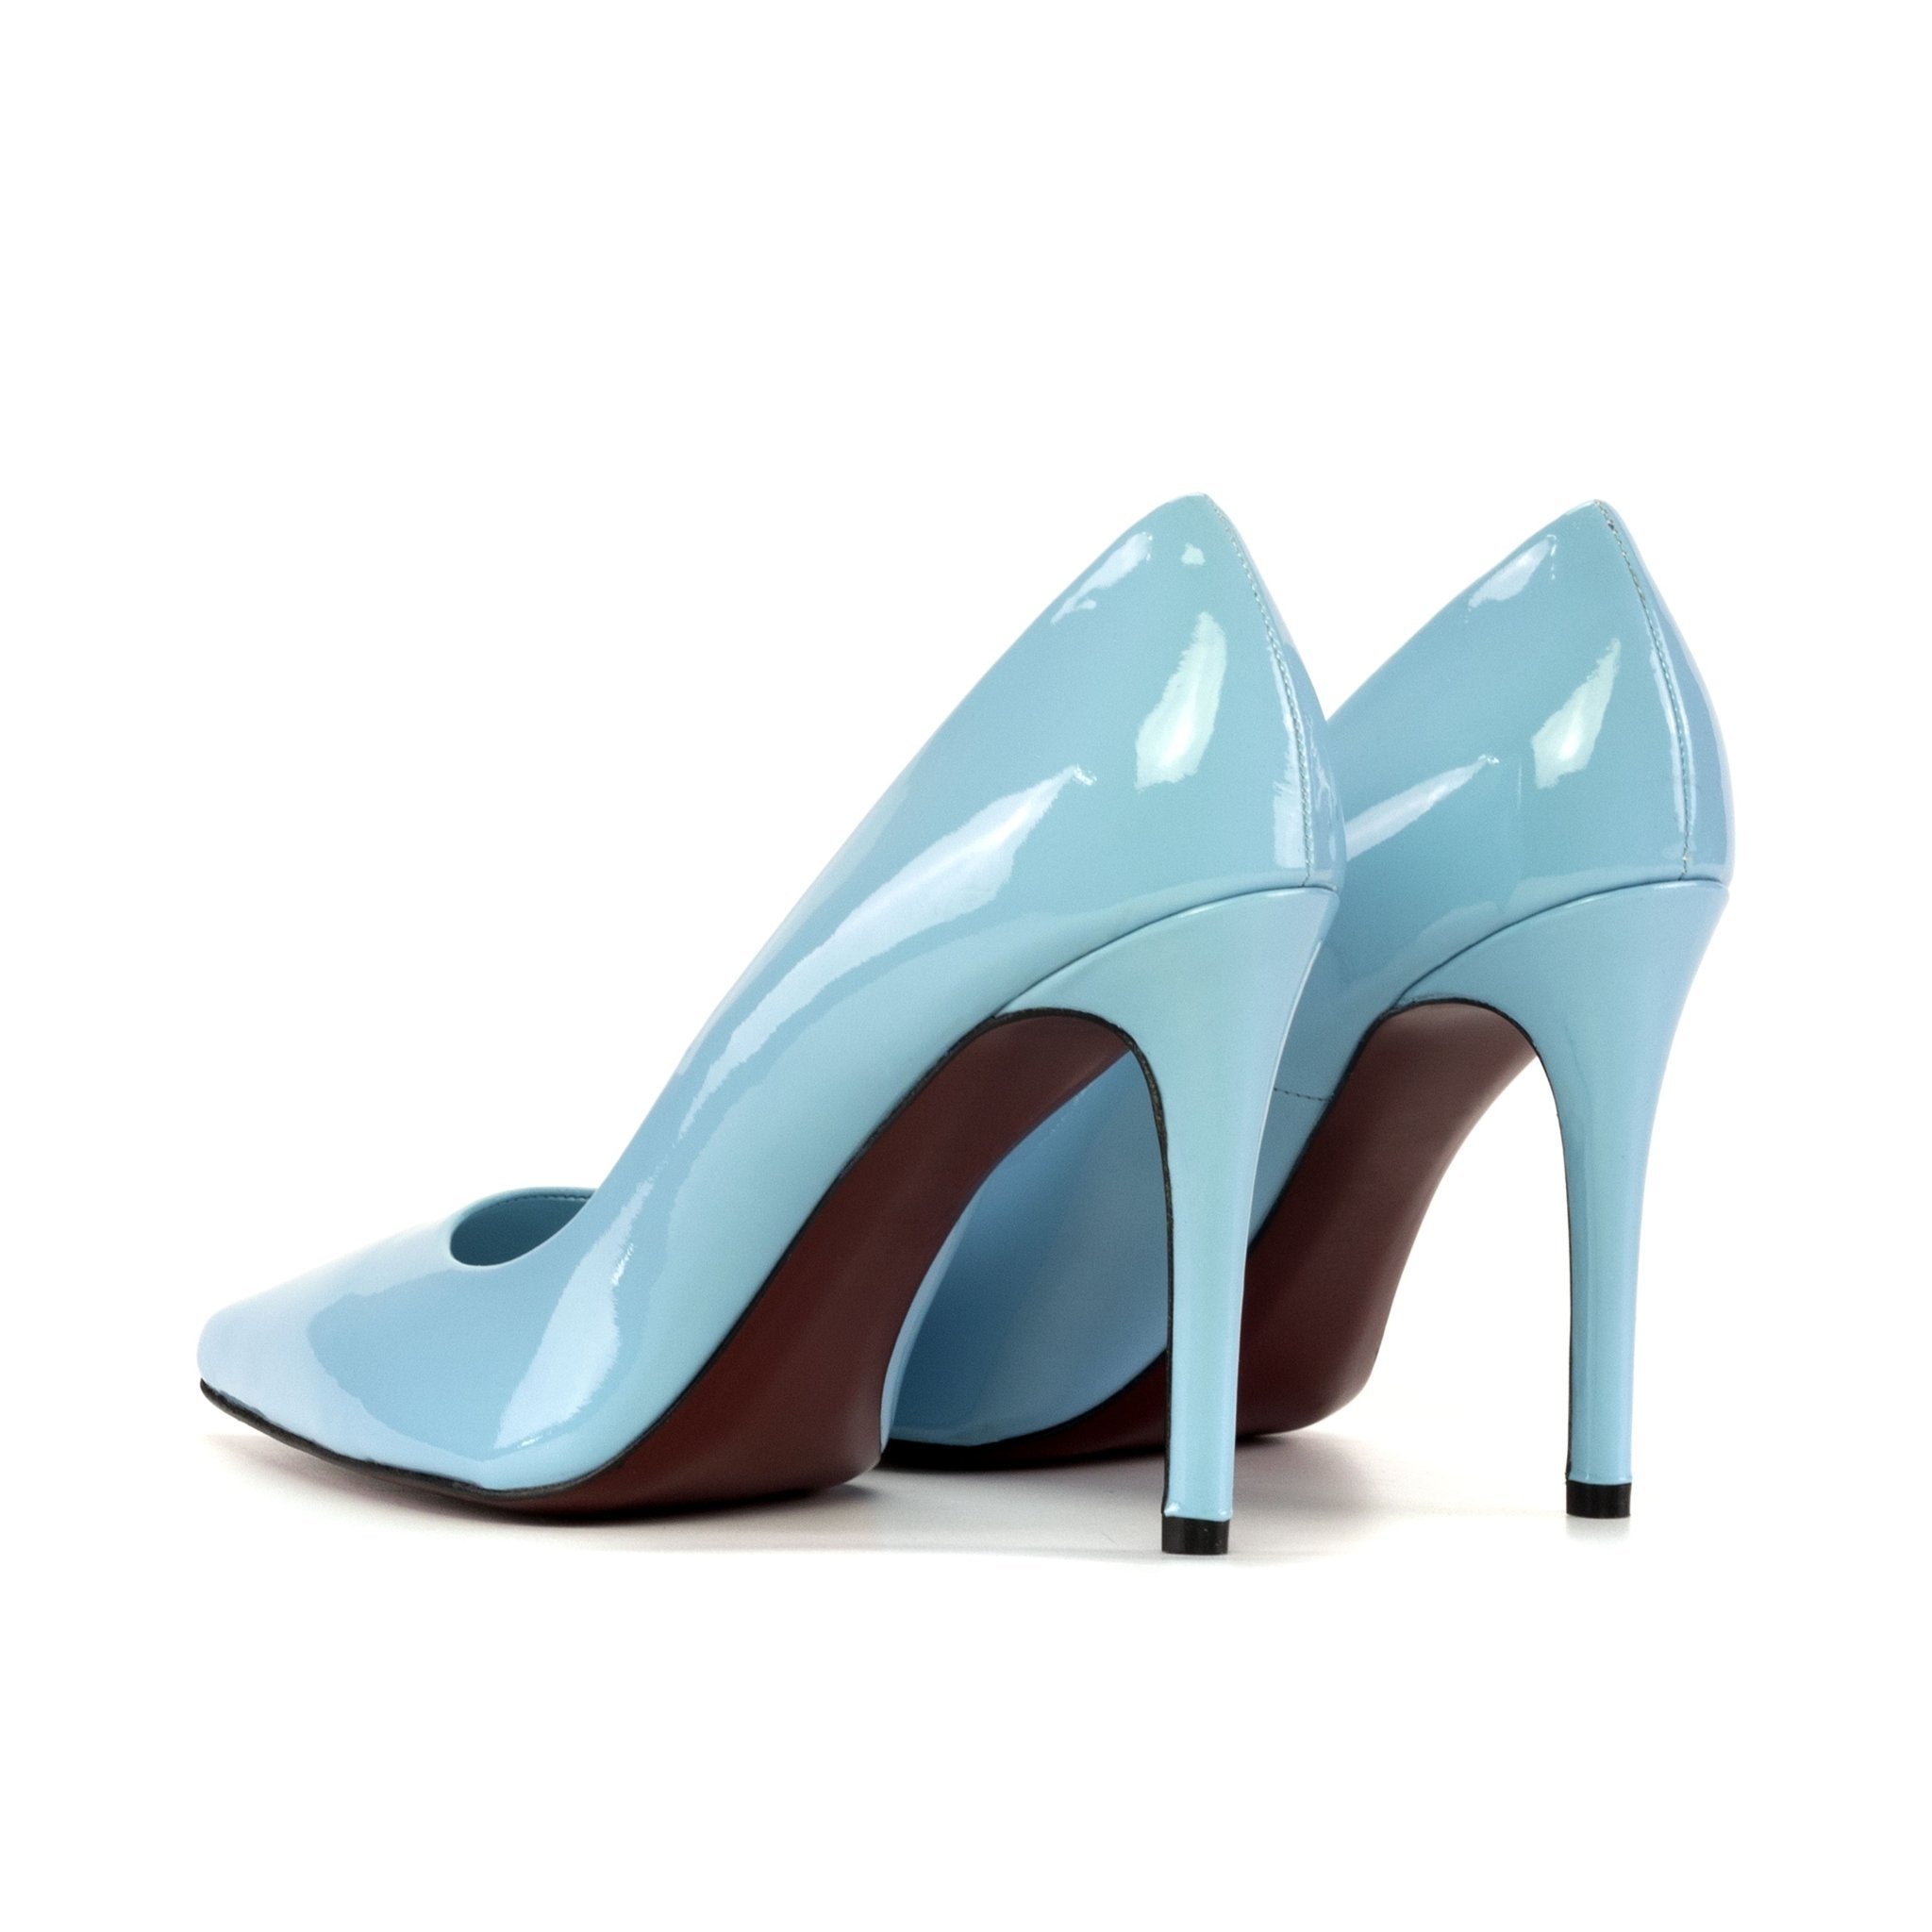 Harmonie 100mm Heels in Sky Blue Patent Leather - Maison de Kingsley Couture Harmonie et Fureur Spain